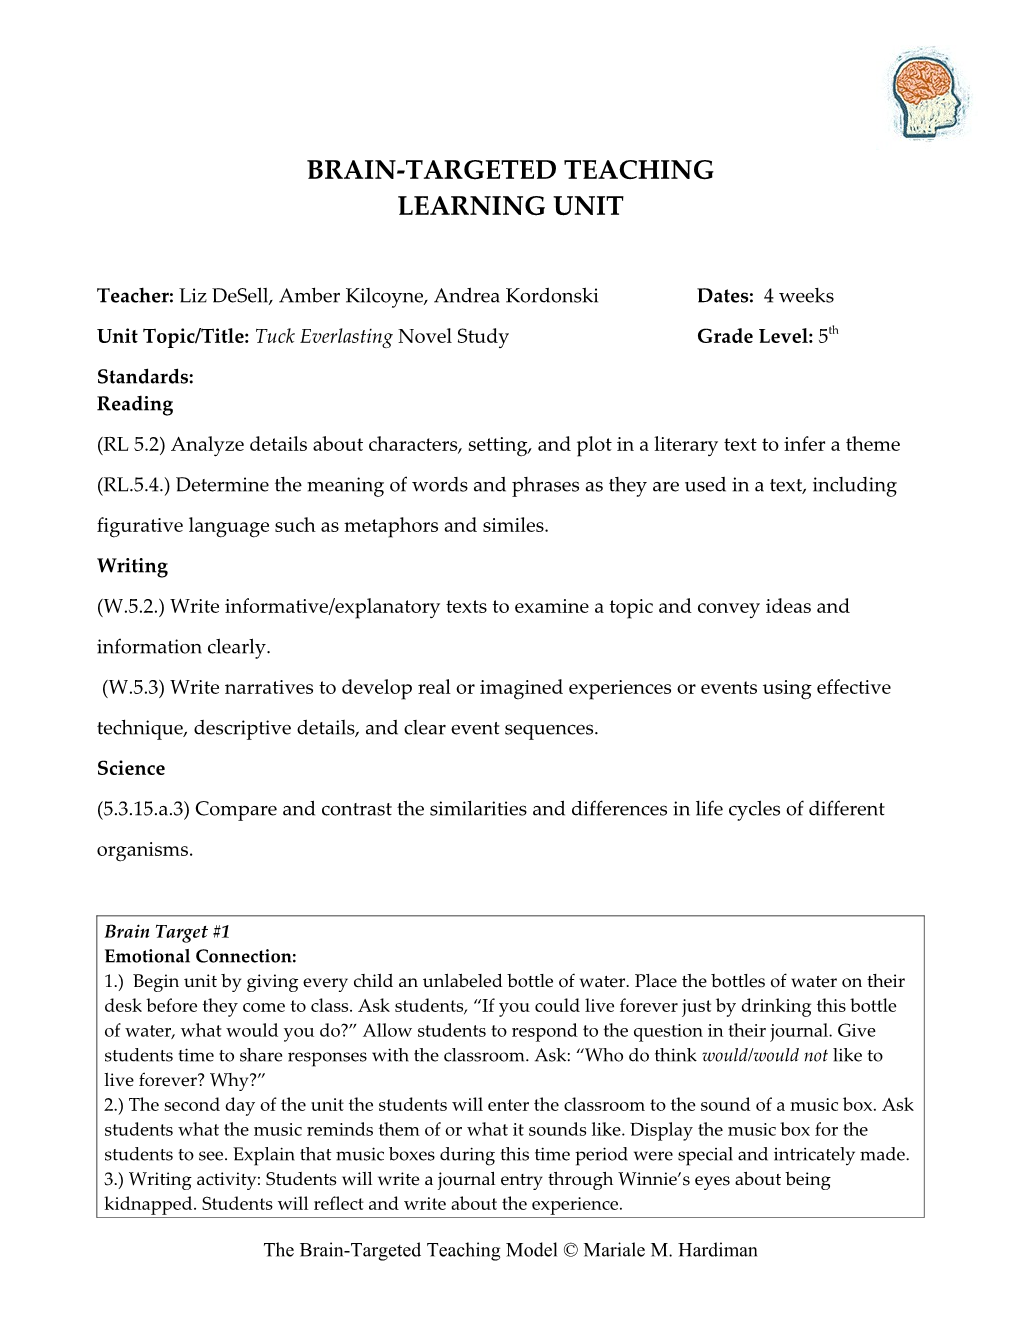 Brain-Targeted Teaching